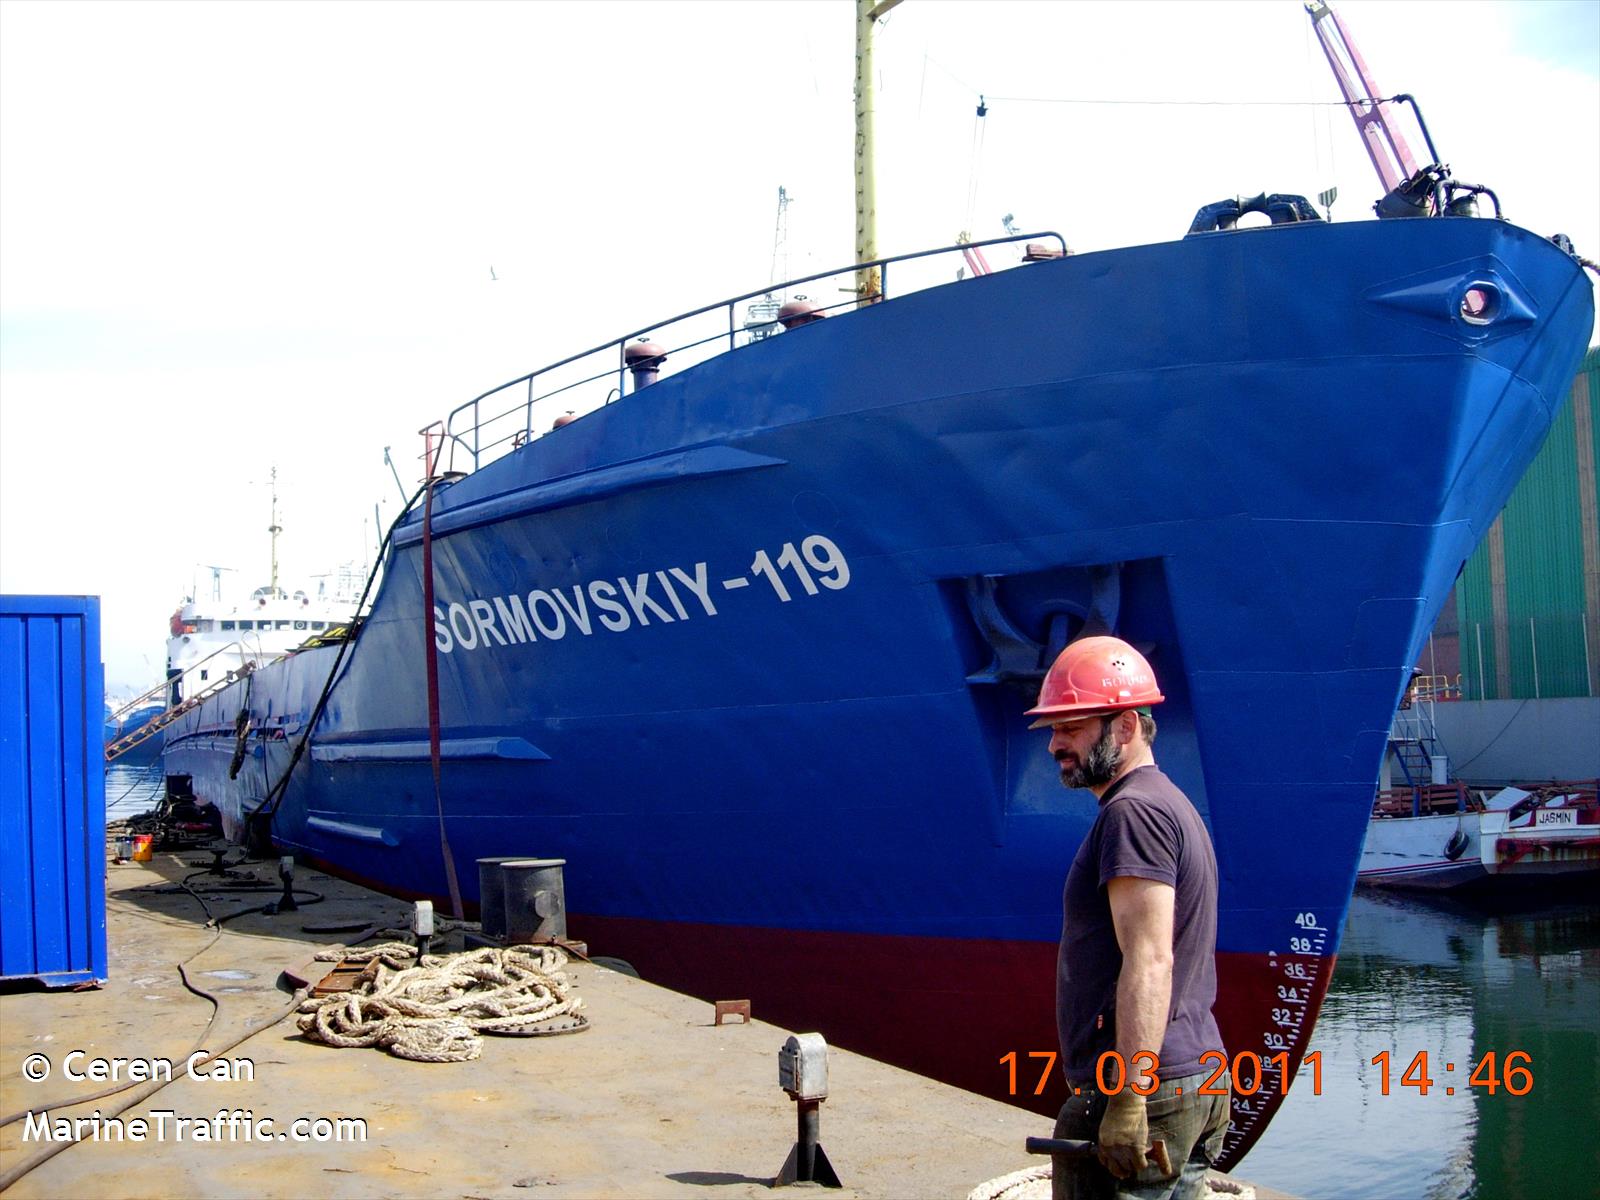 sormovskiy 119 (General Cargo Ship) - IMO 8035154, MMSI 620884000, Call Sign D6A2892 under the flag of Comoros